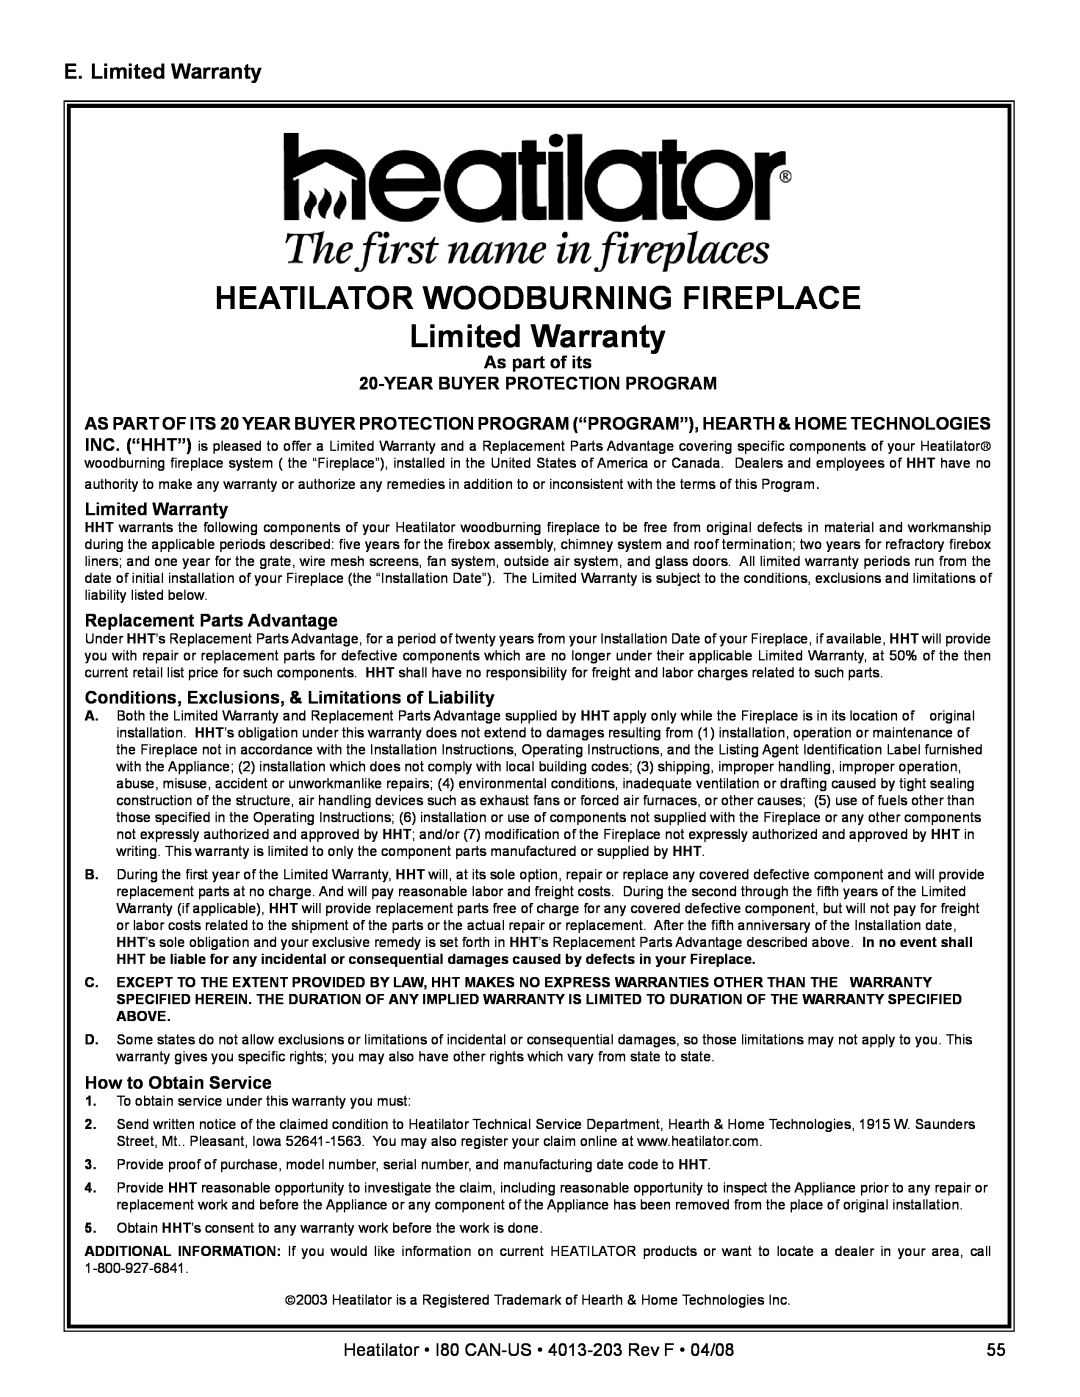 Heatiator I80 HEATILATOR WOODBURNING FIREPLACE Limited Warranty, As part of its 20-YEARBUYER PROTECTION PROGRAM 